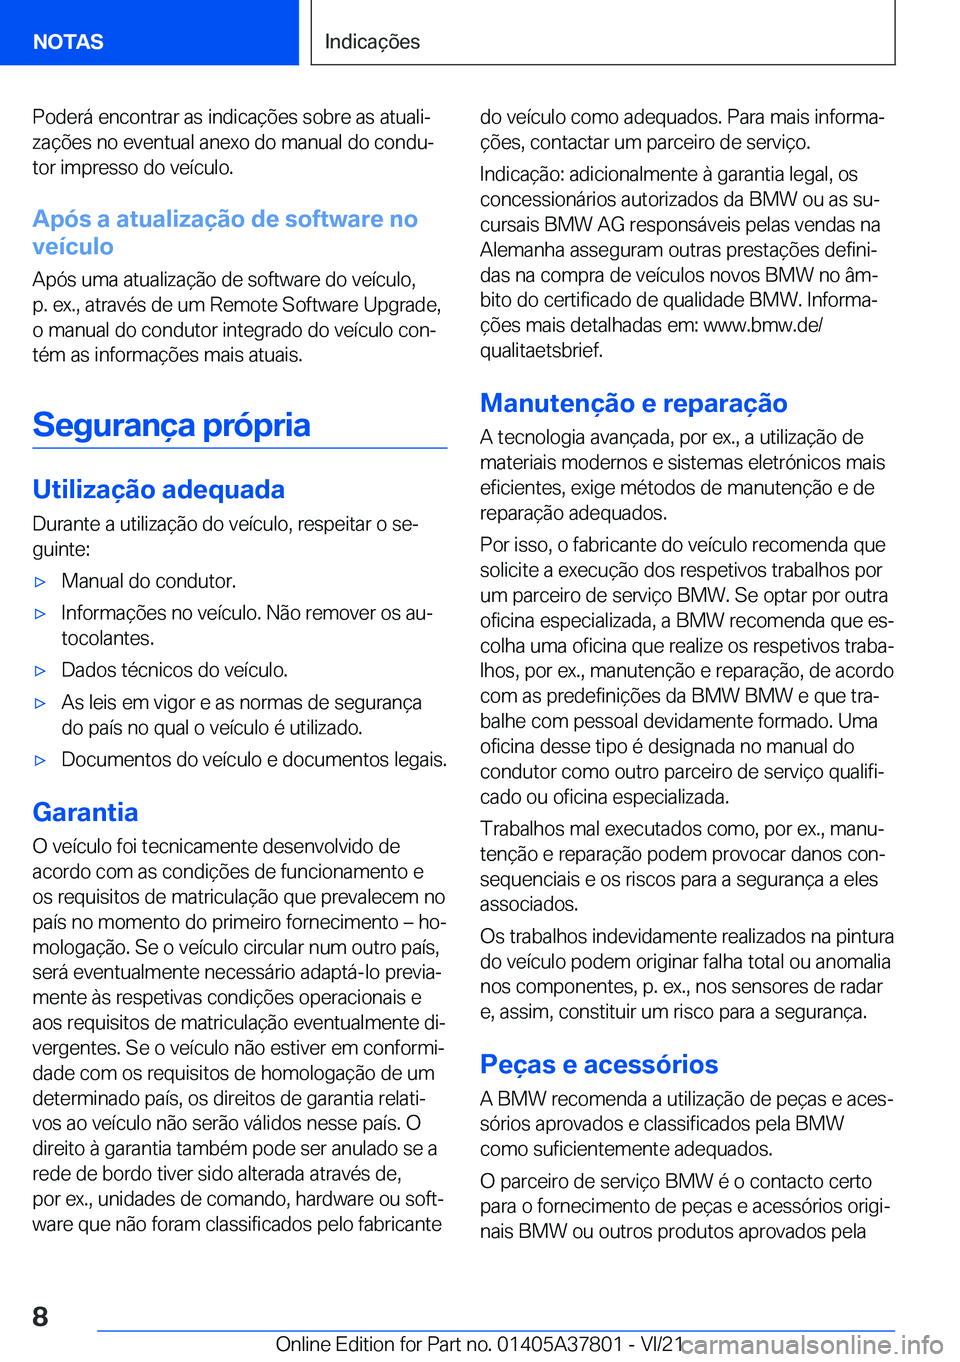 BMW X3 M 2022  Manual do condutor (in Portuguese) �P�o�d�e�r�á��e�n�c�o�n�t�r�a�r��a�s��i�n�d�i�c�a�